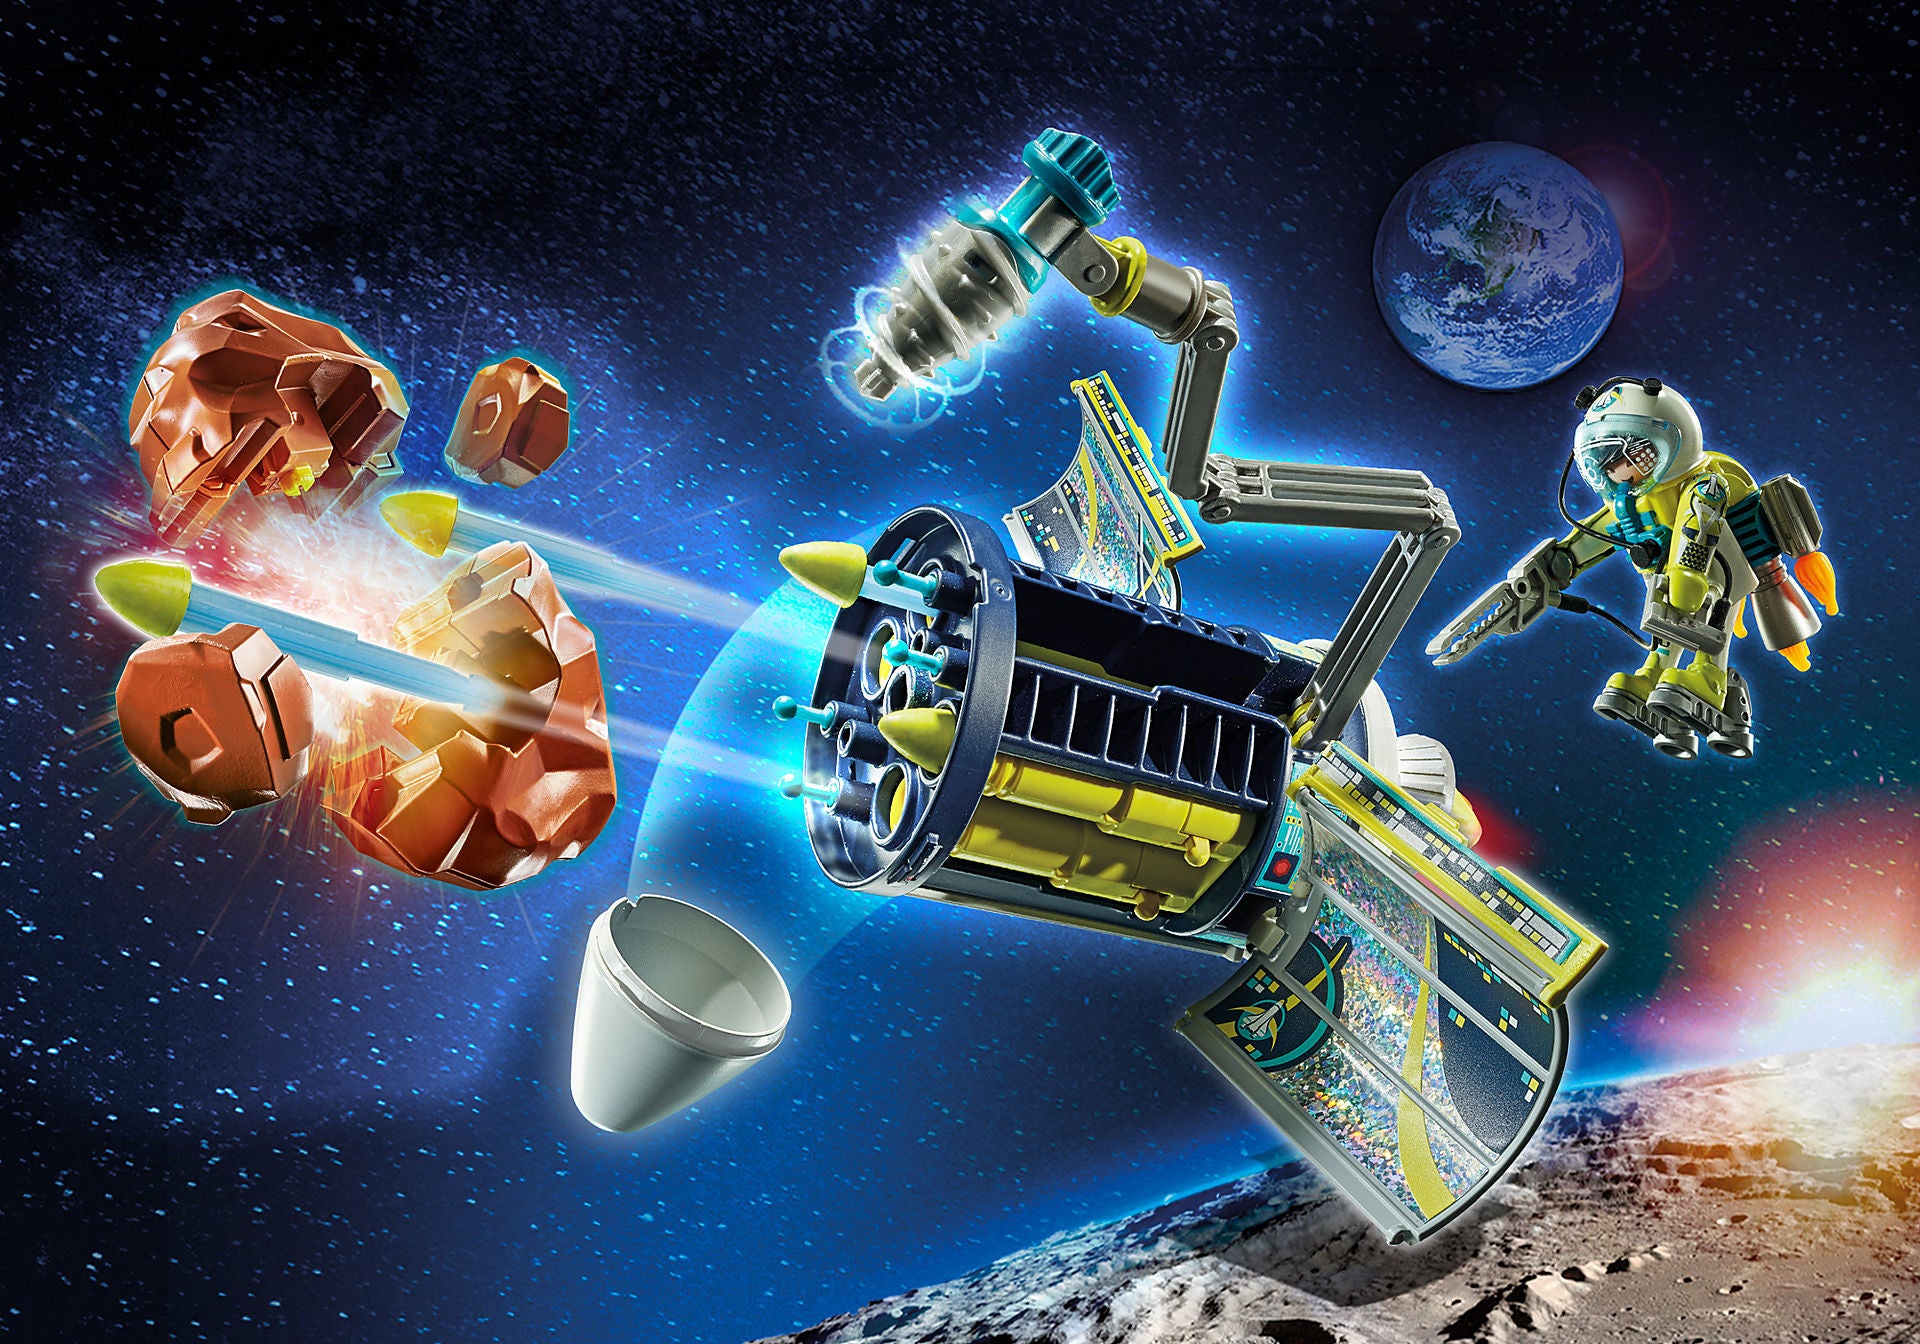 Playmobil Space Promo Pack: Destructor de Meteoritos 71369